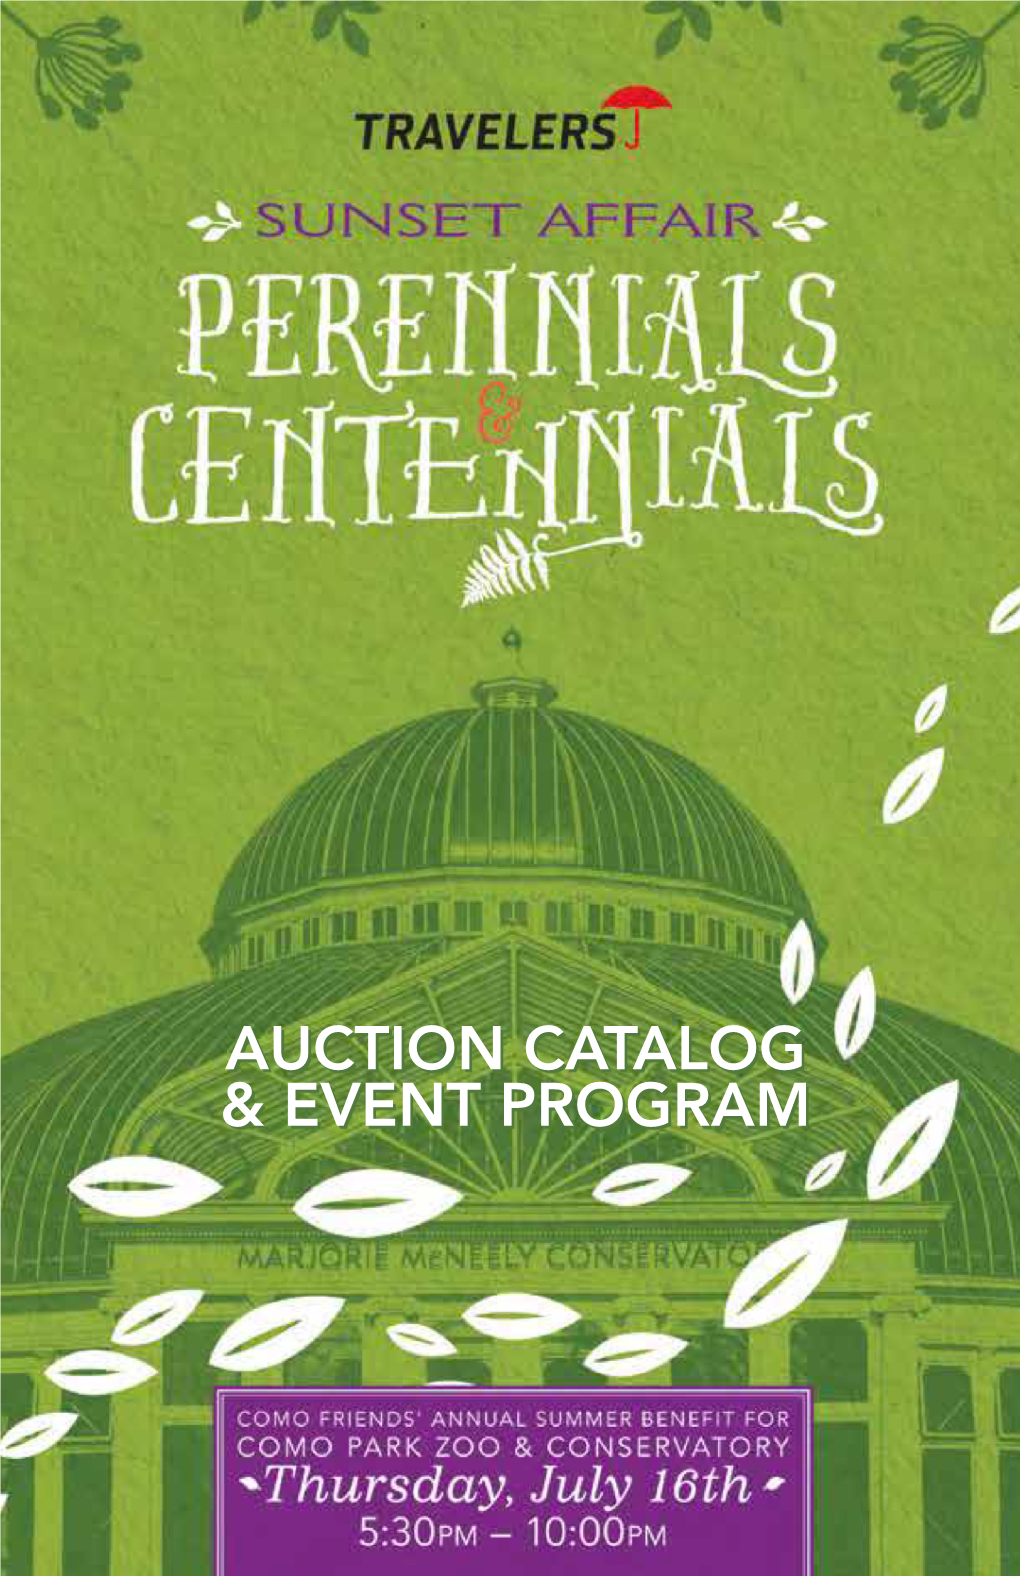 Auction Catalog & Event Program